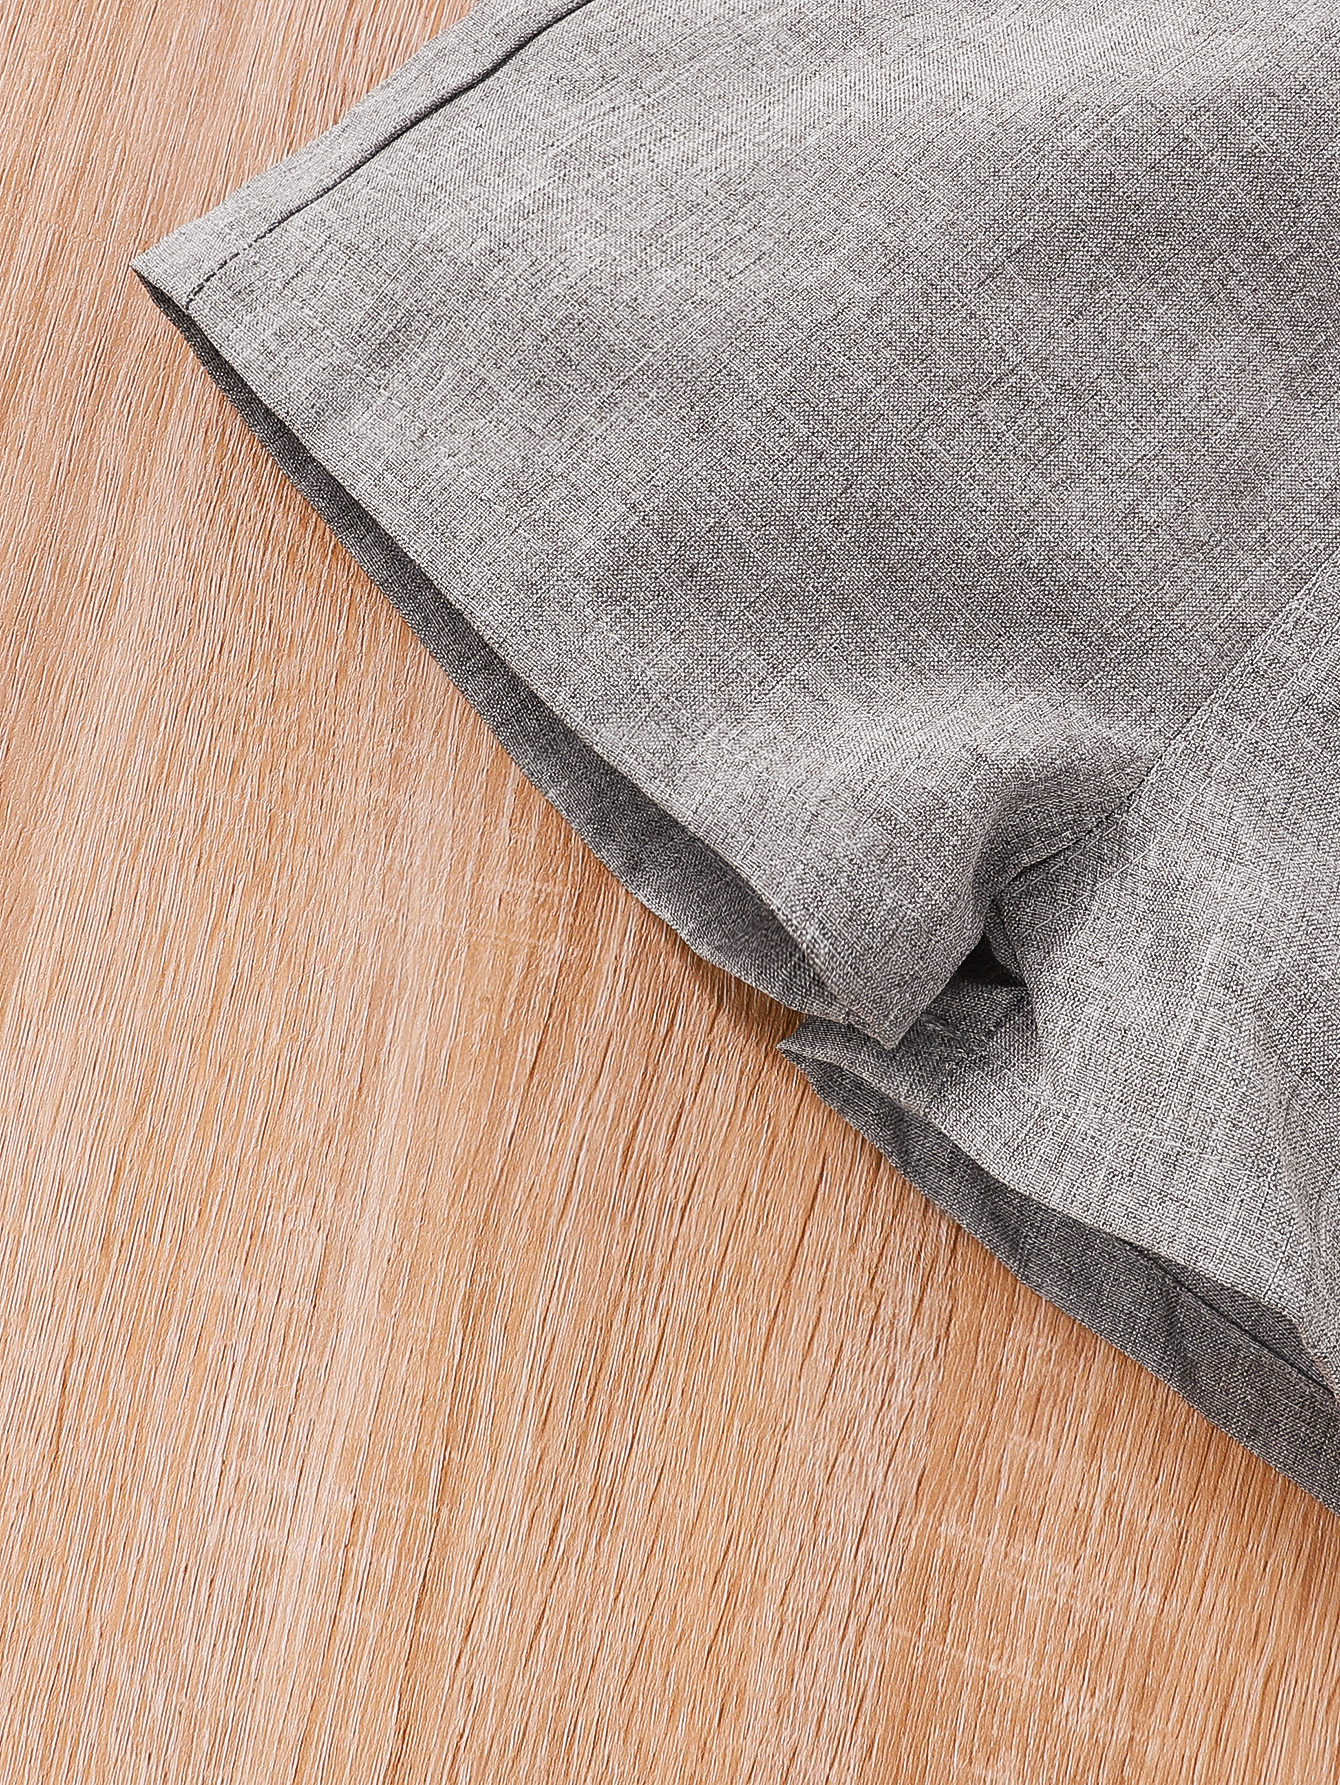 Conjunto de dos piezas de pantalones grises con correa superior triangular de manga corta a rayas para niospicture4